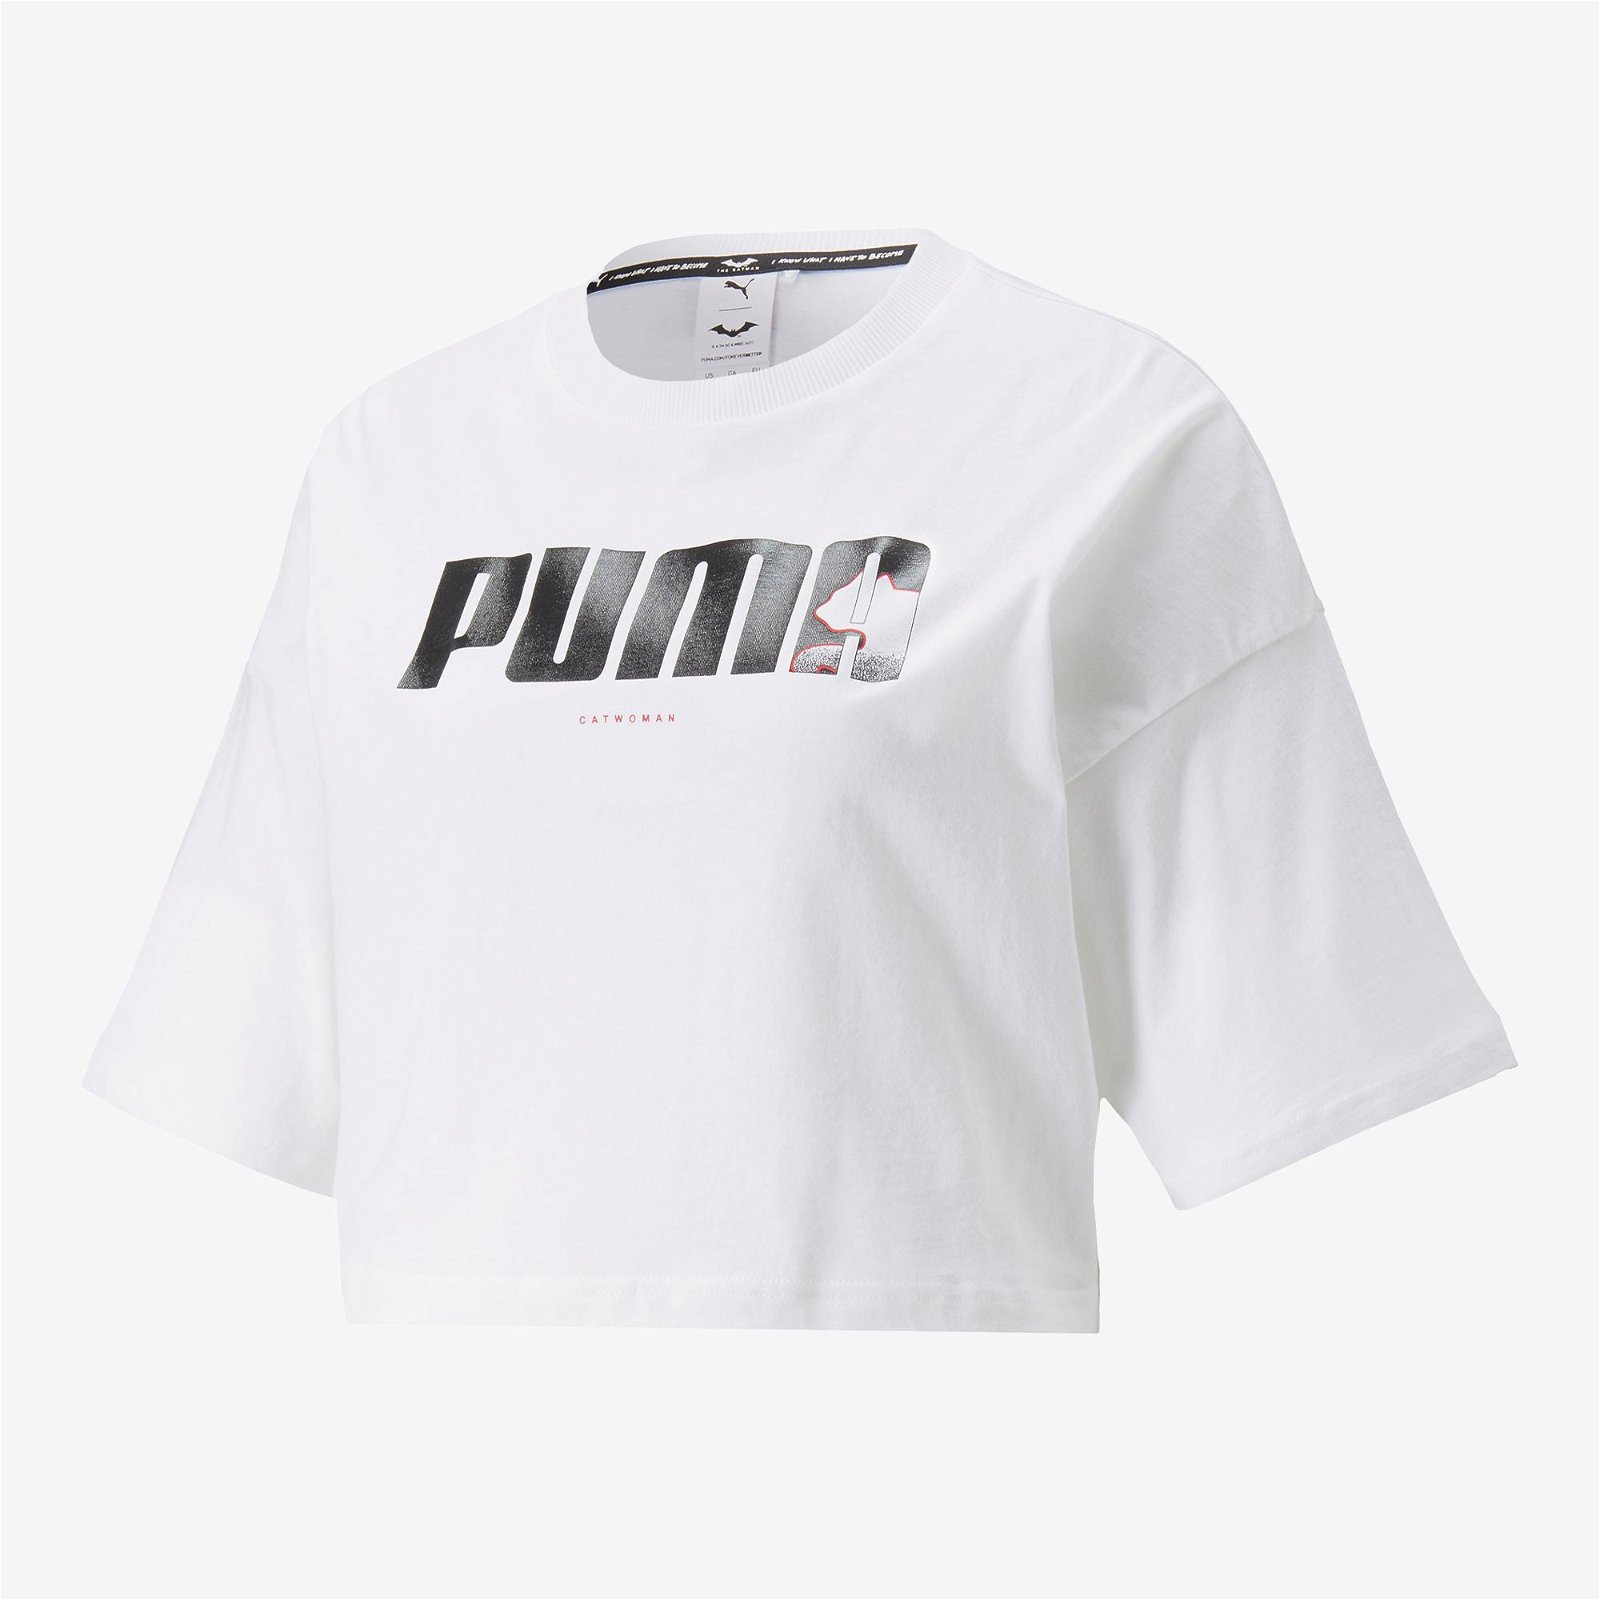 Puma  x Batman Kadın Beyaz T-Shirt